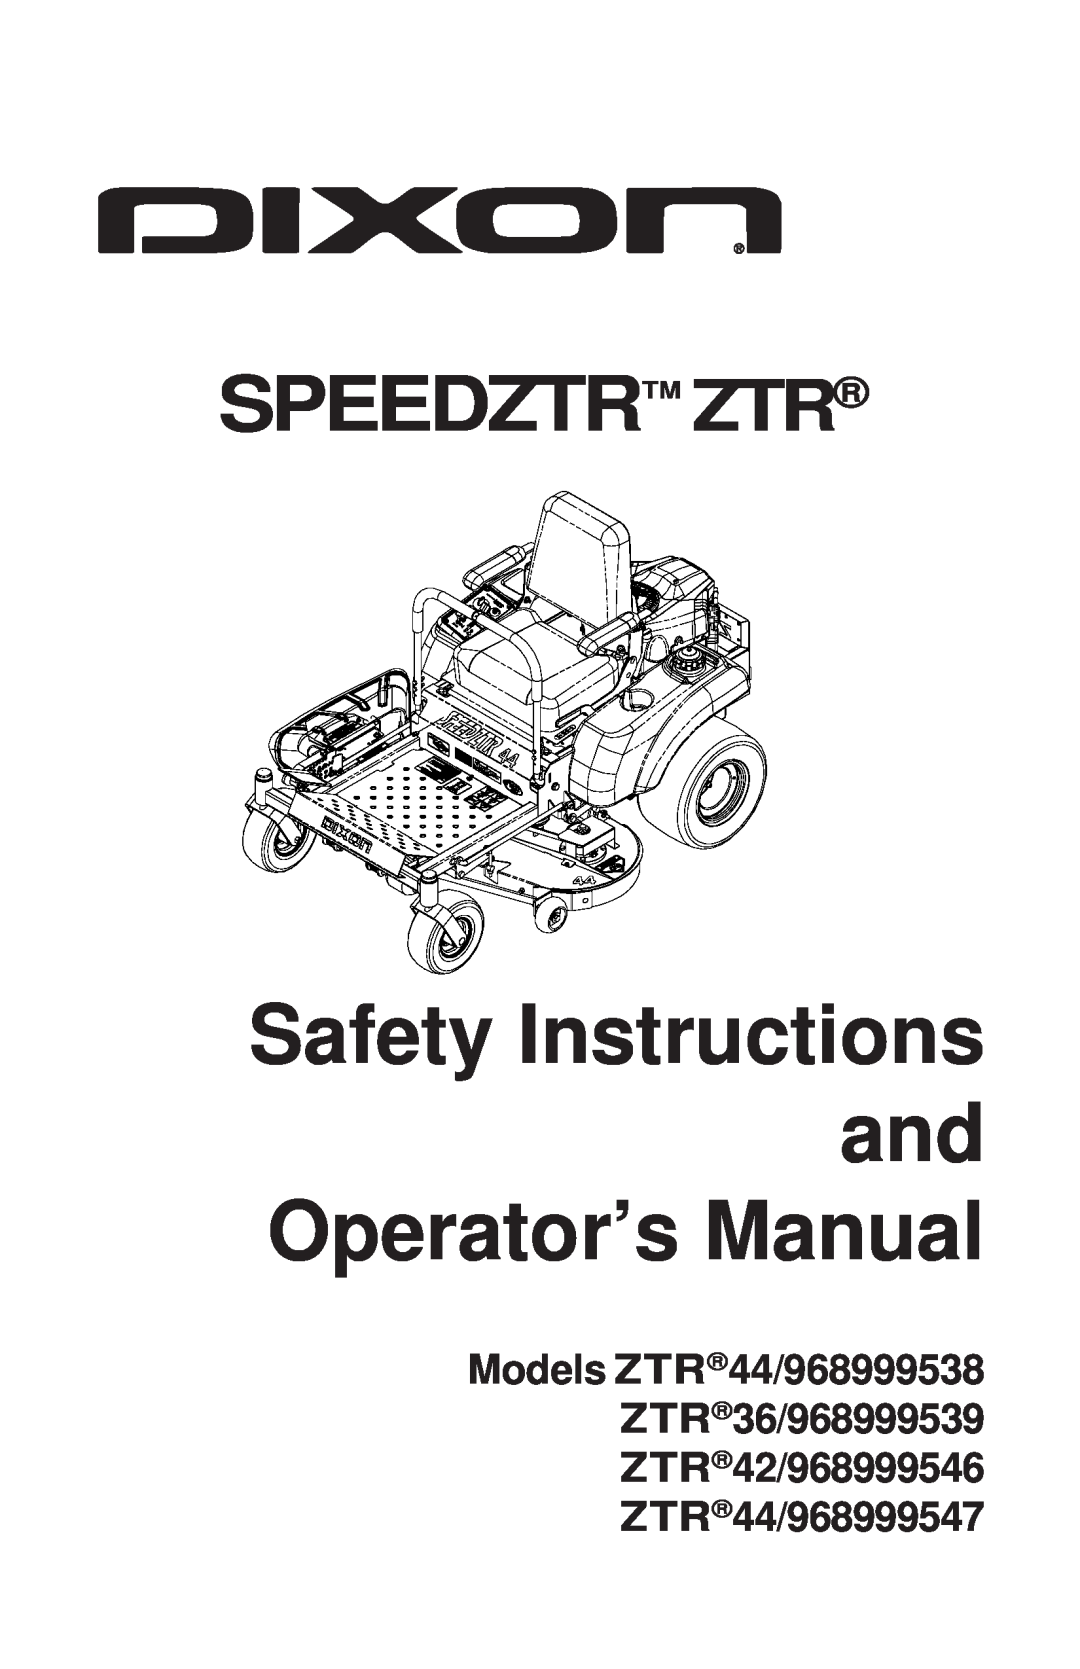 Dixon ZTR 44/968999538 manual Safety Instructions and Operator’s Manual, Speedztr Ztr, ZTR42/968999546 ZTR44/968999547 